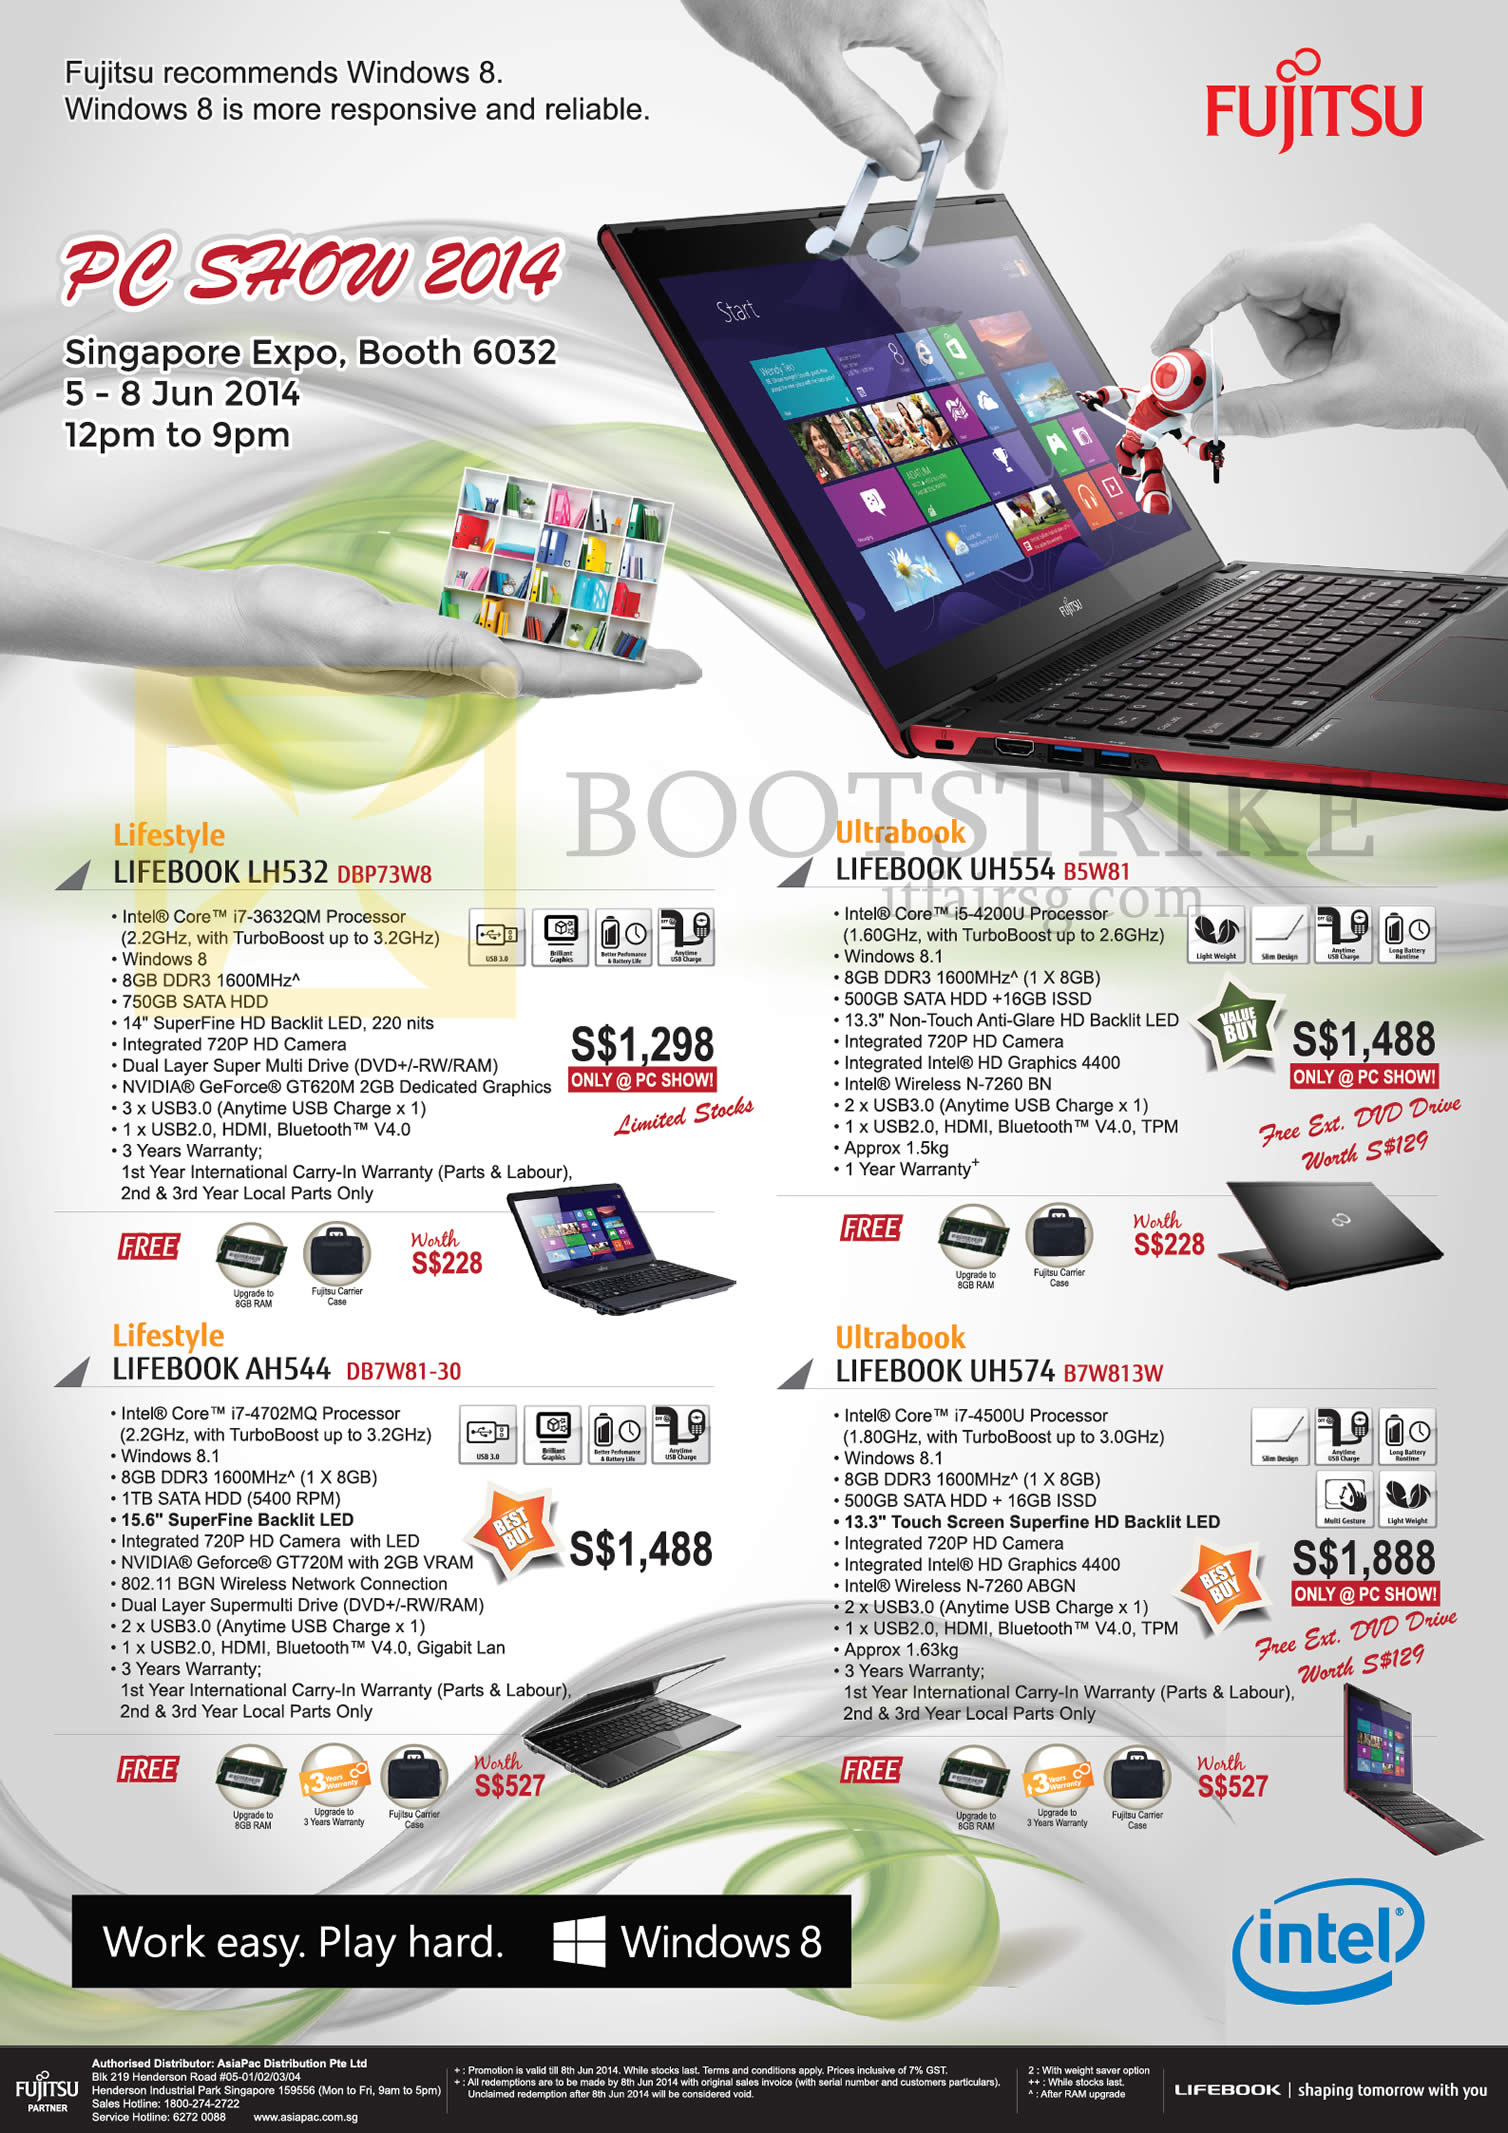 PC SHOW 2014 price list image brochure of Fujitsu Notebooks Lifebook LH532 DBP73W8, UH554 B5W81, AH544 DB7W81-30, UH574 B7W813W